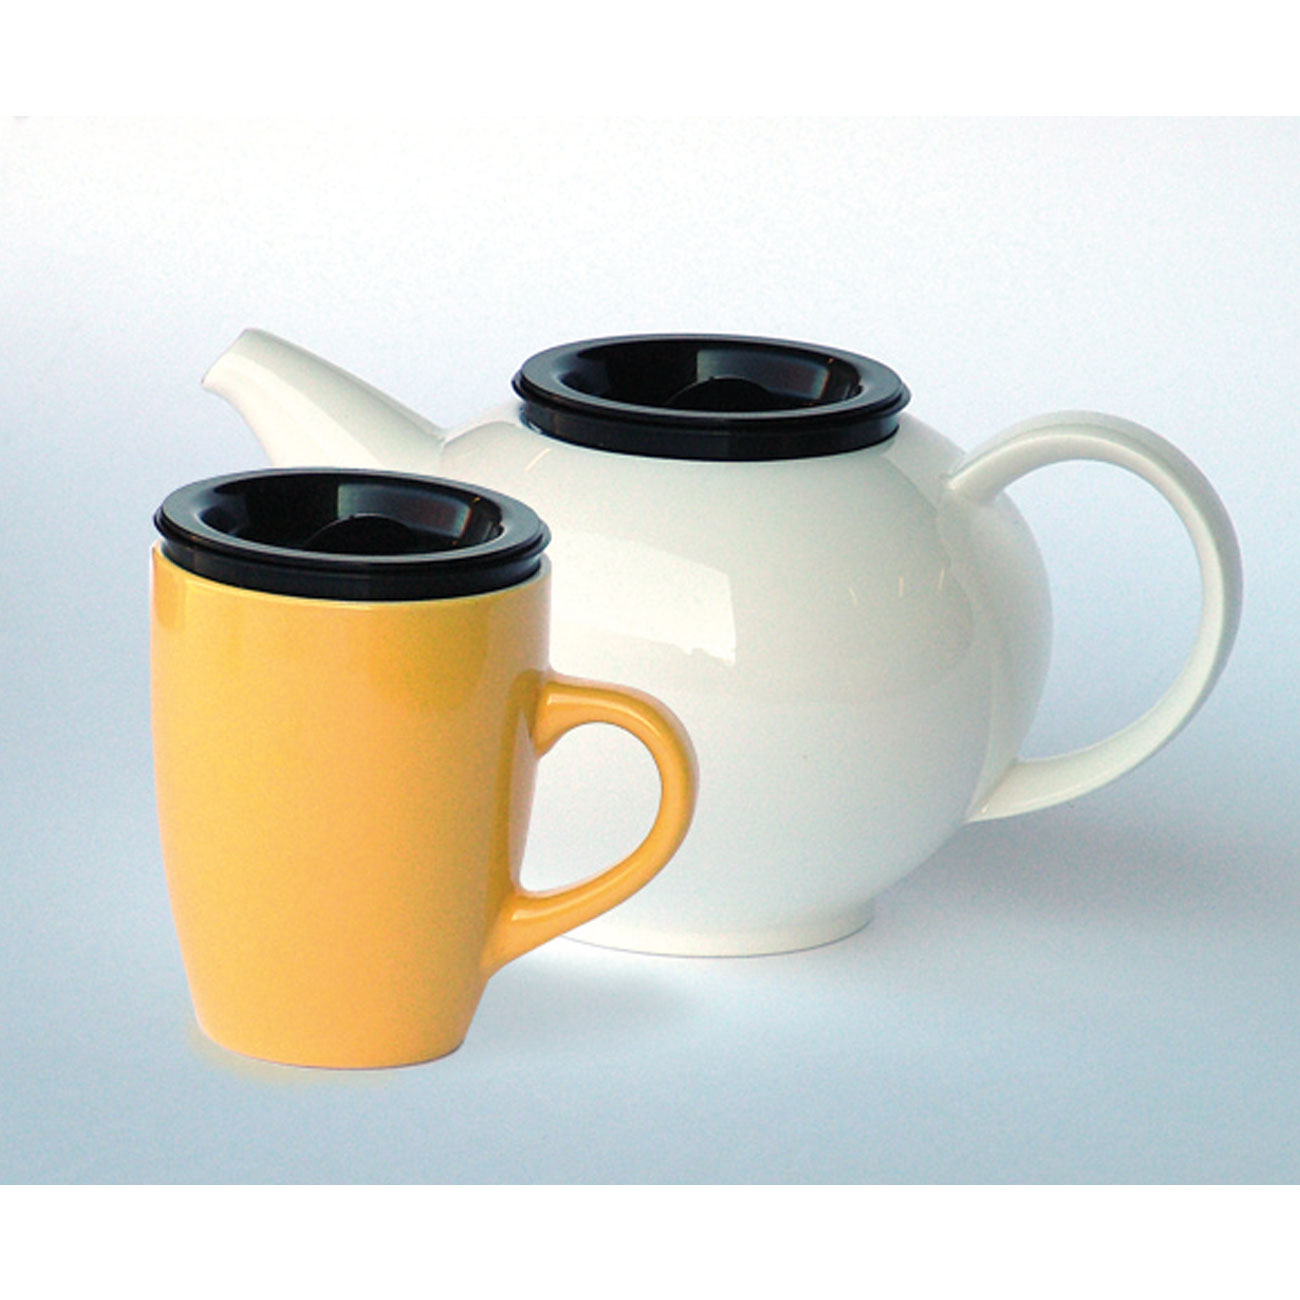 t-sac Tee Dauerfilter (Teefilter,Teesieb) für losen Tee, geeignet für Teetassen